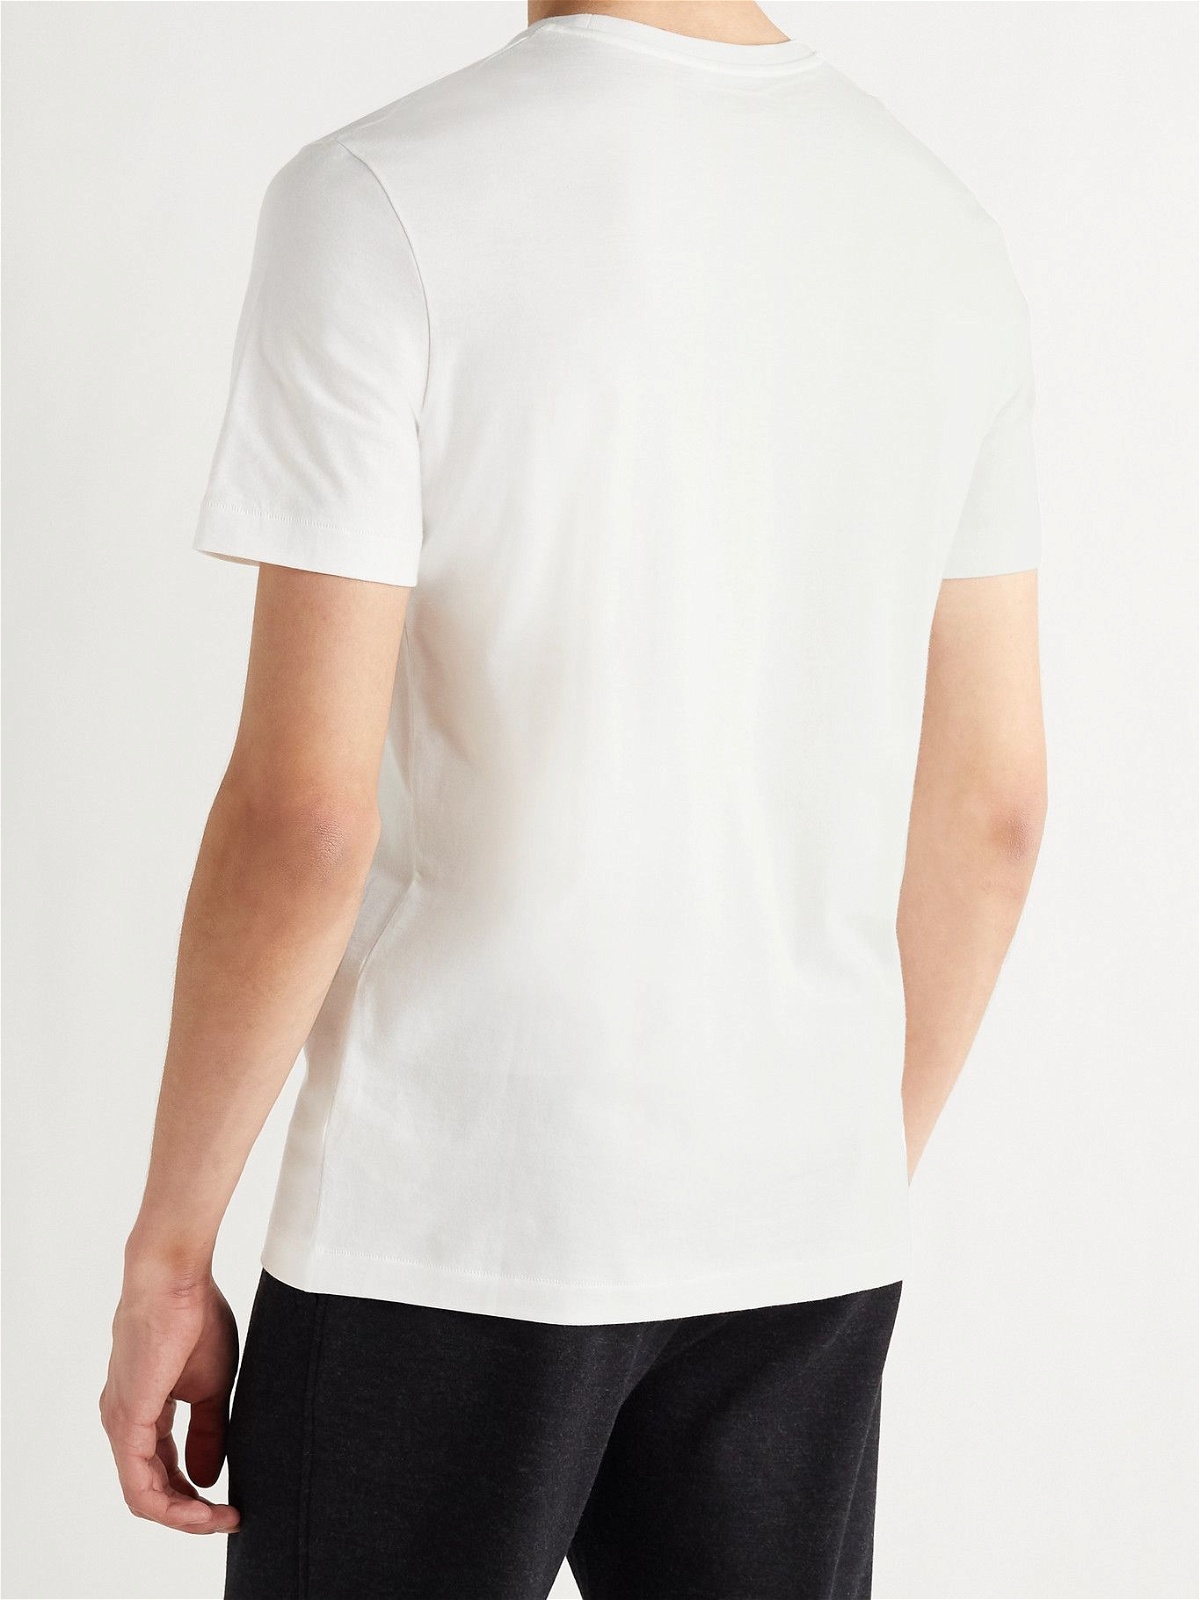 THE ROW - Luke Cotton-Jersey T-Shirt - White The Row